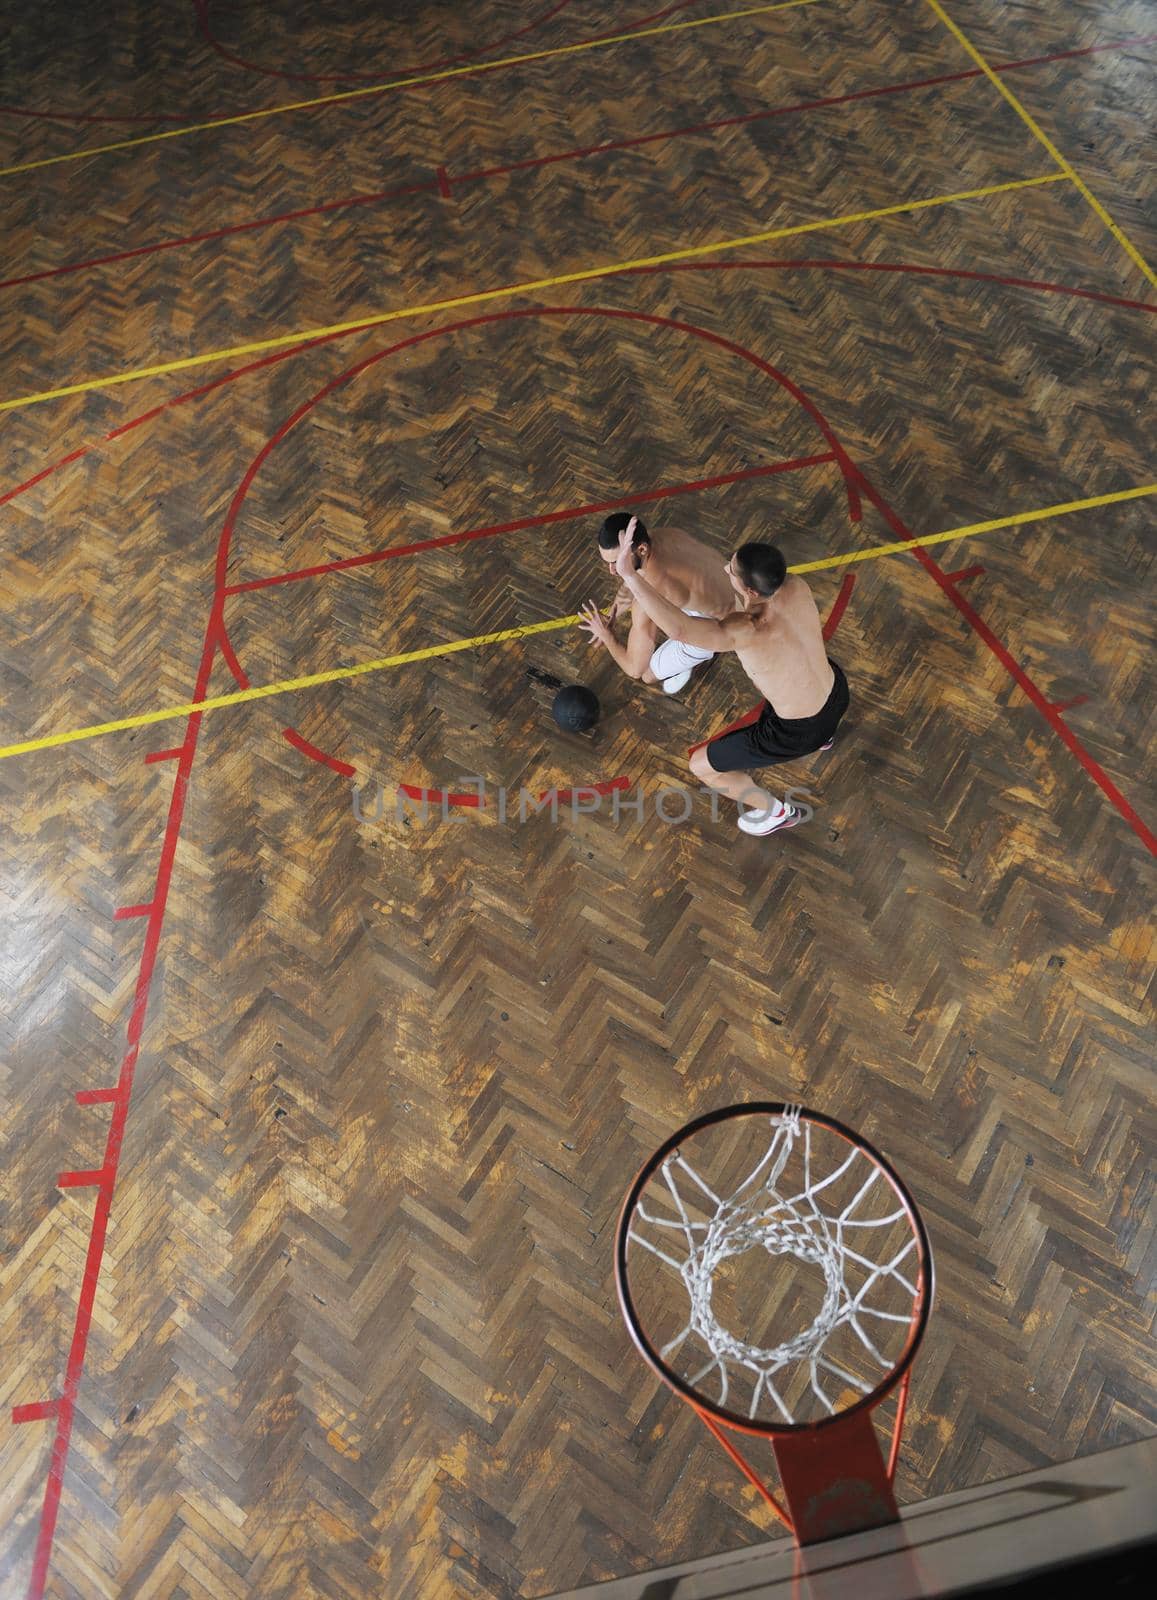 magic basketball  by dotshock